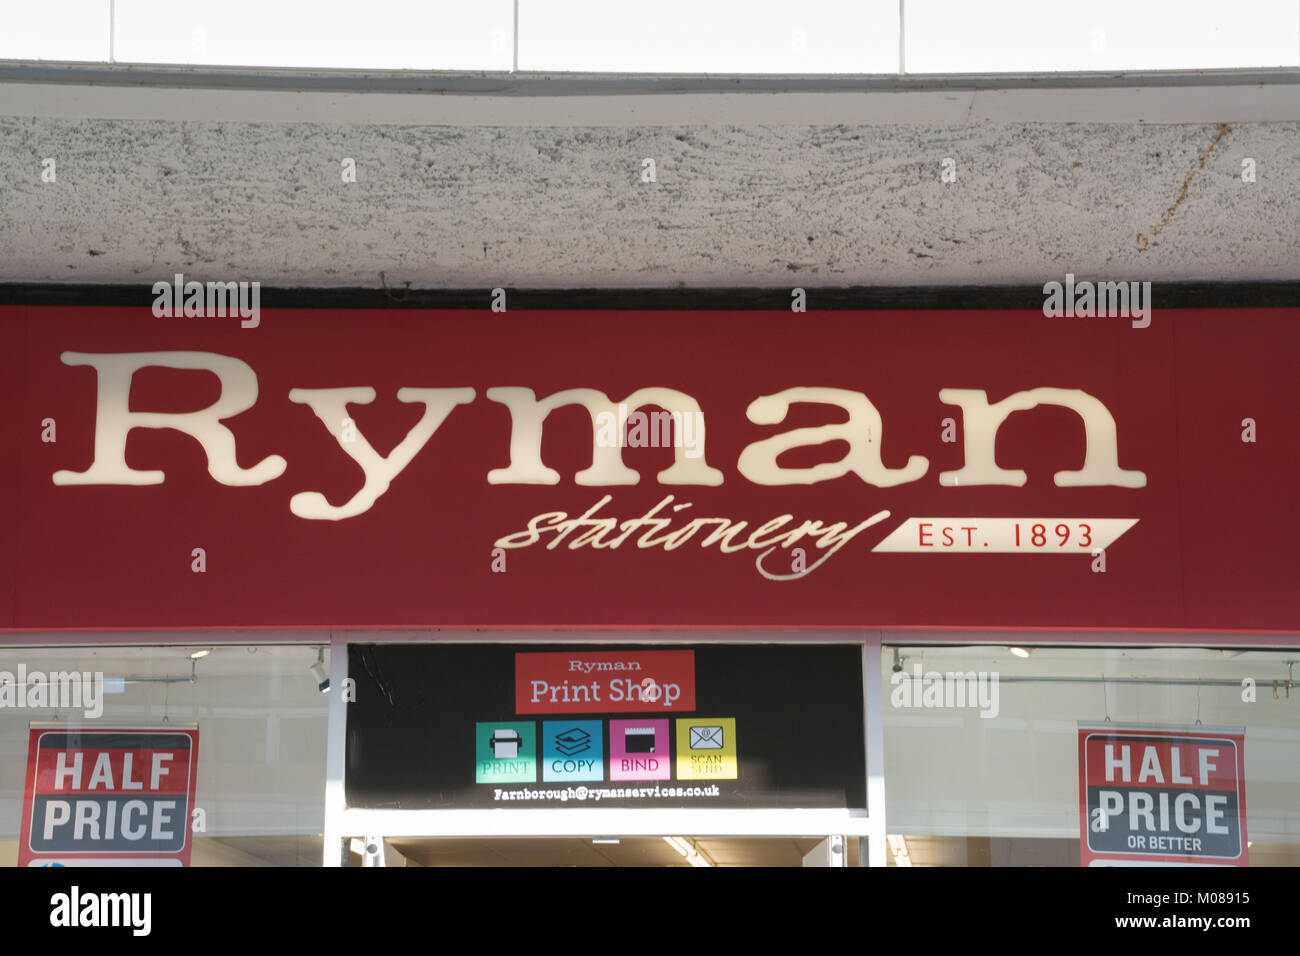 Ryman stationery shop front and sign, UK Stock Photo